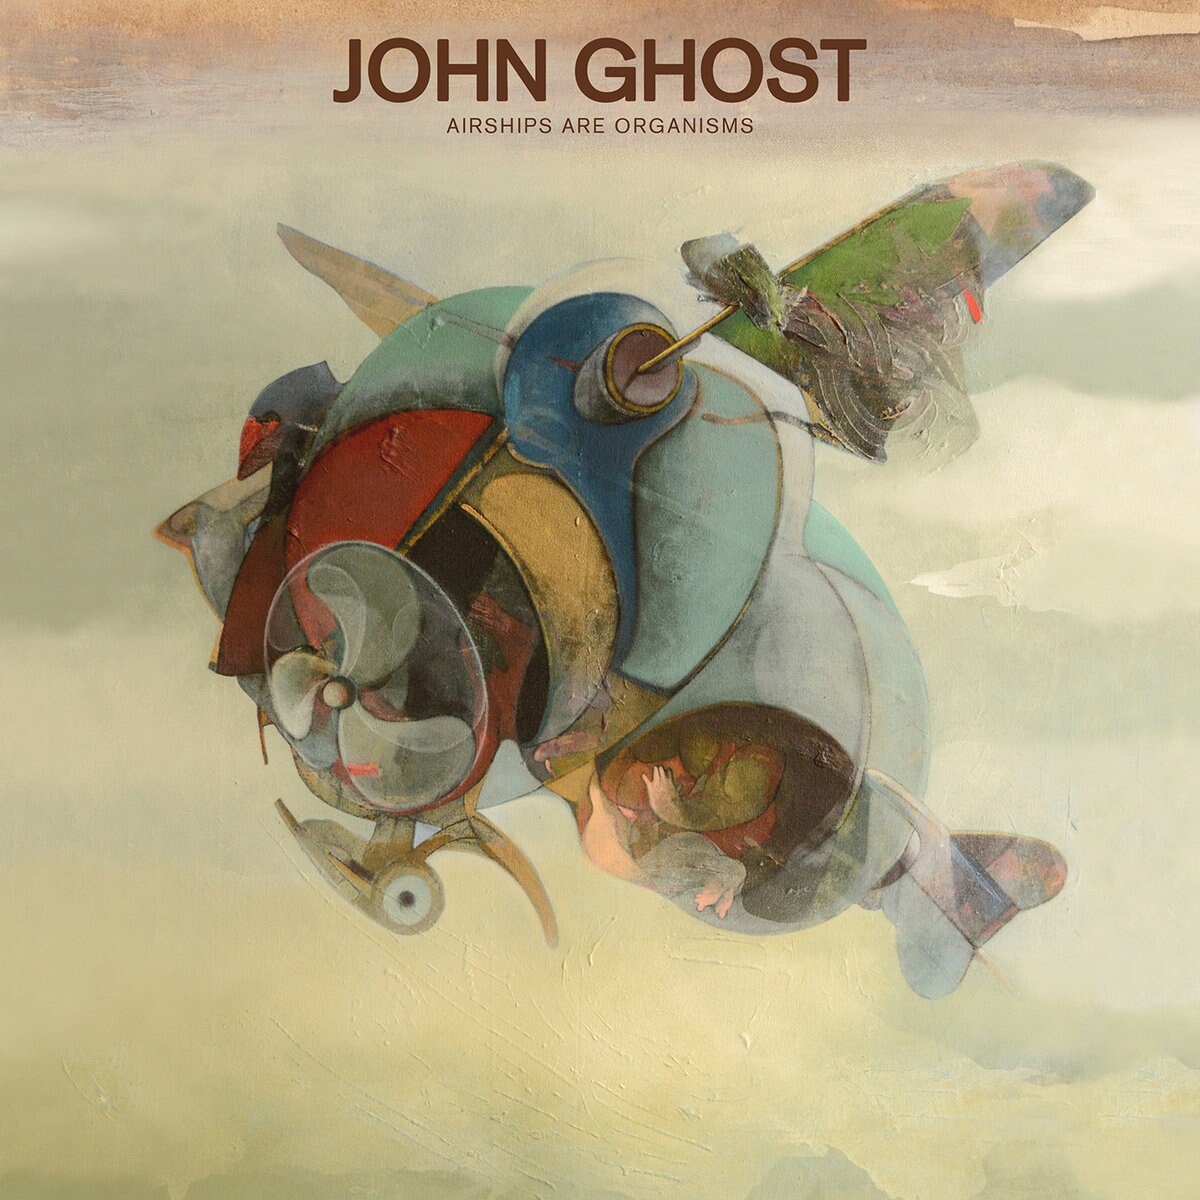 John Ghost - Airships are Organisms ★★★★☆